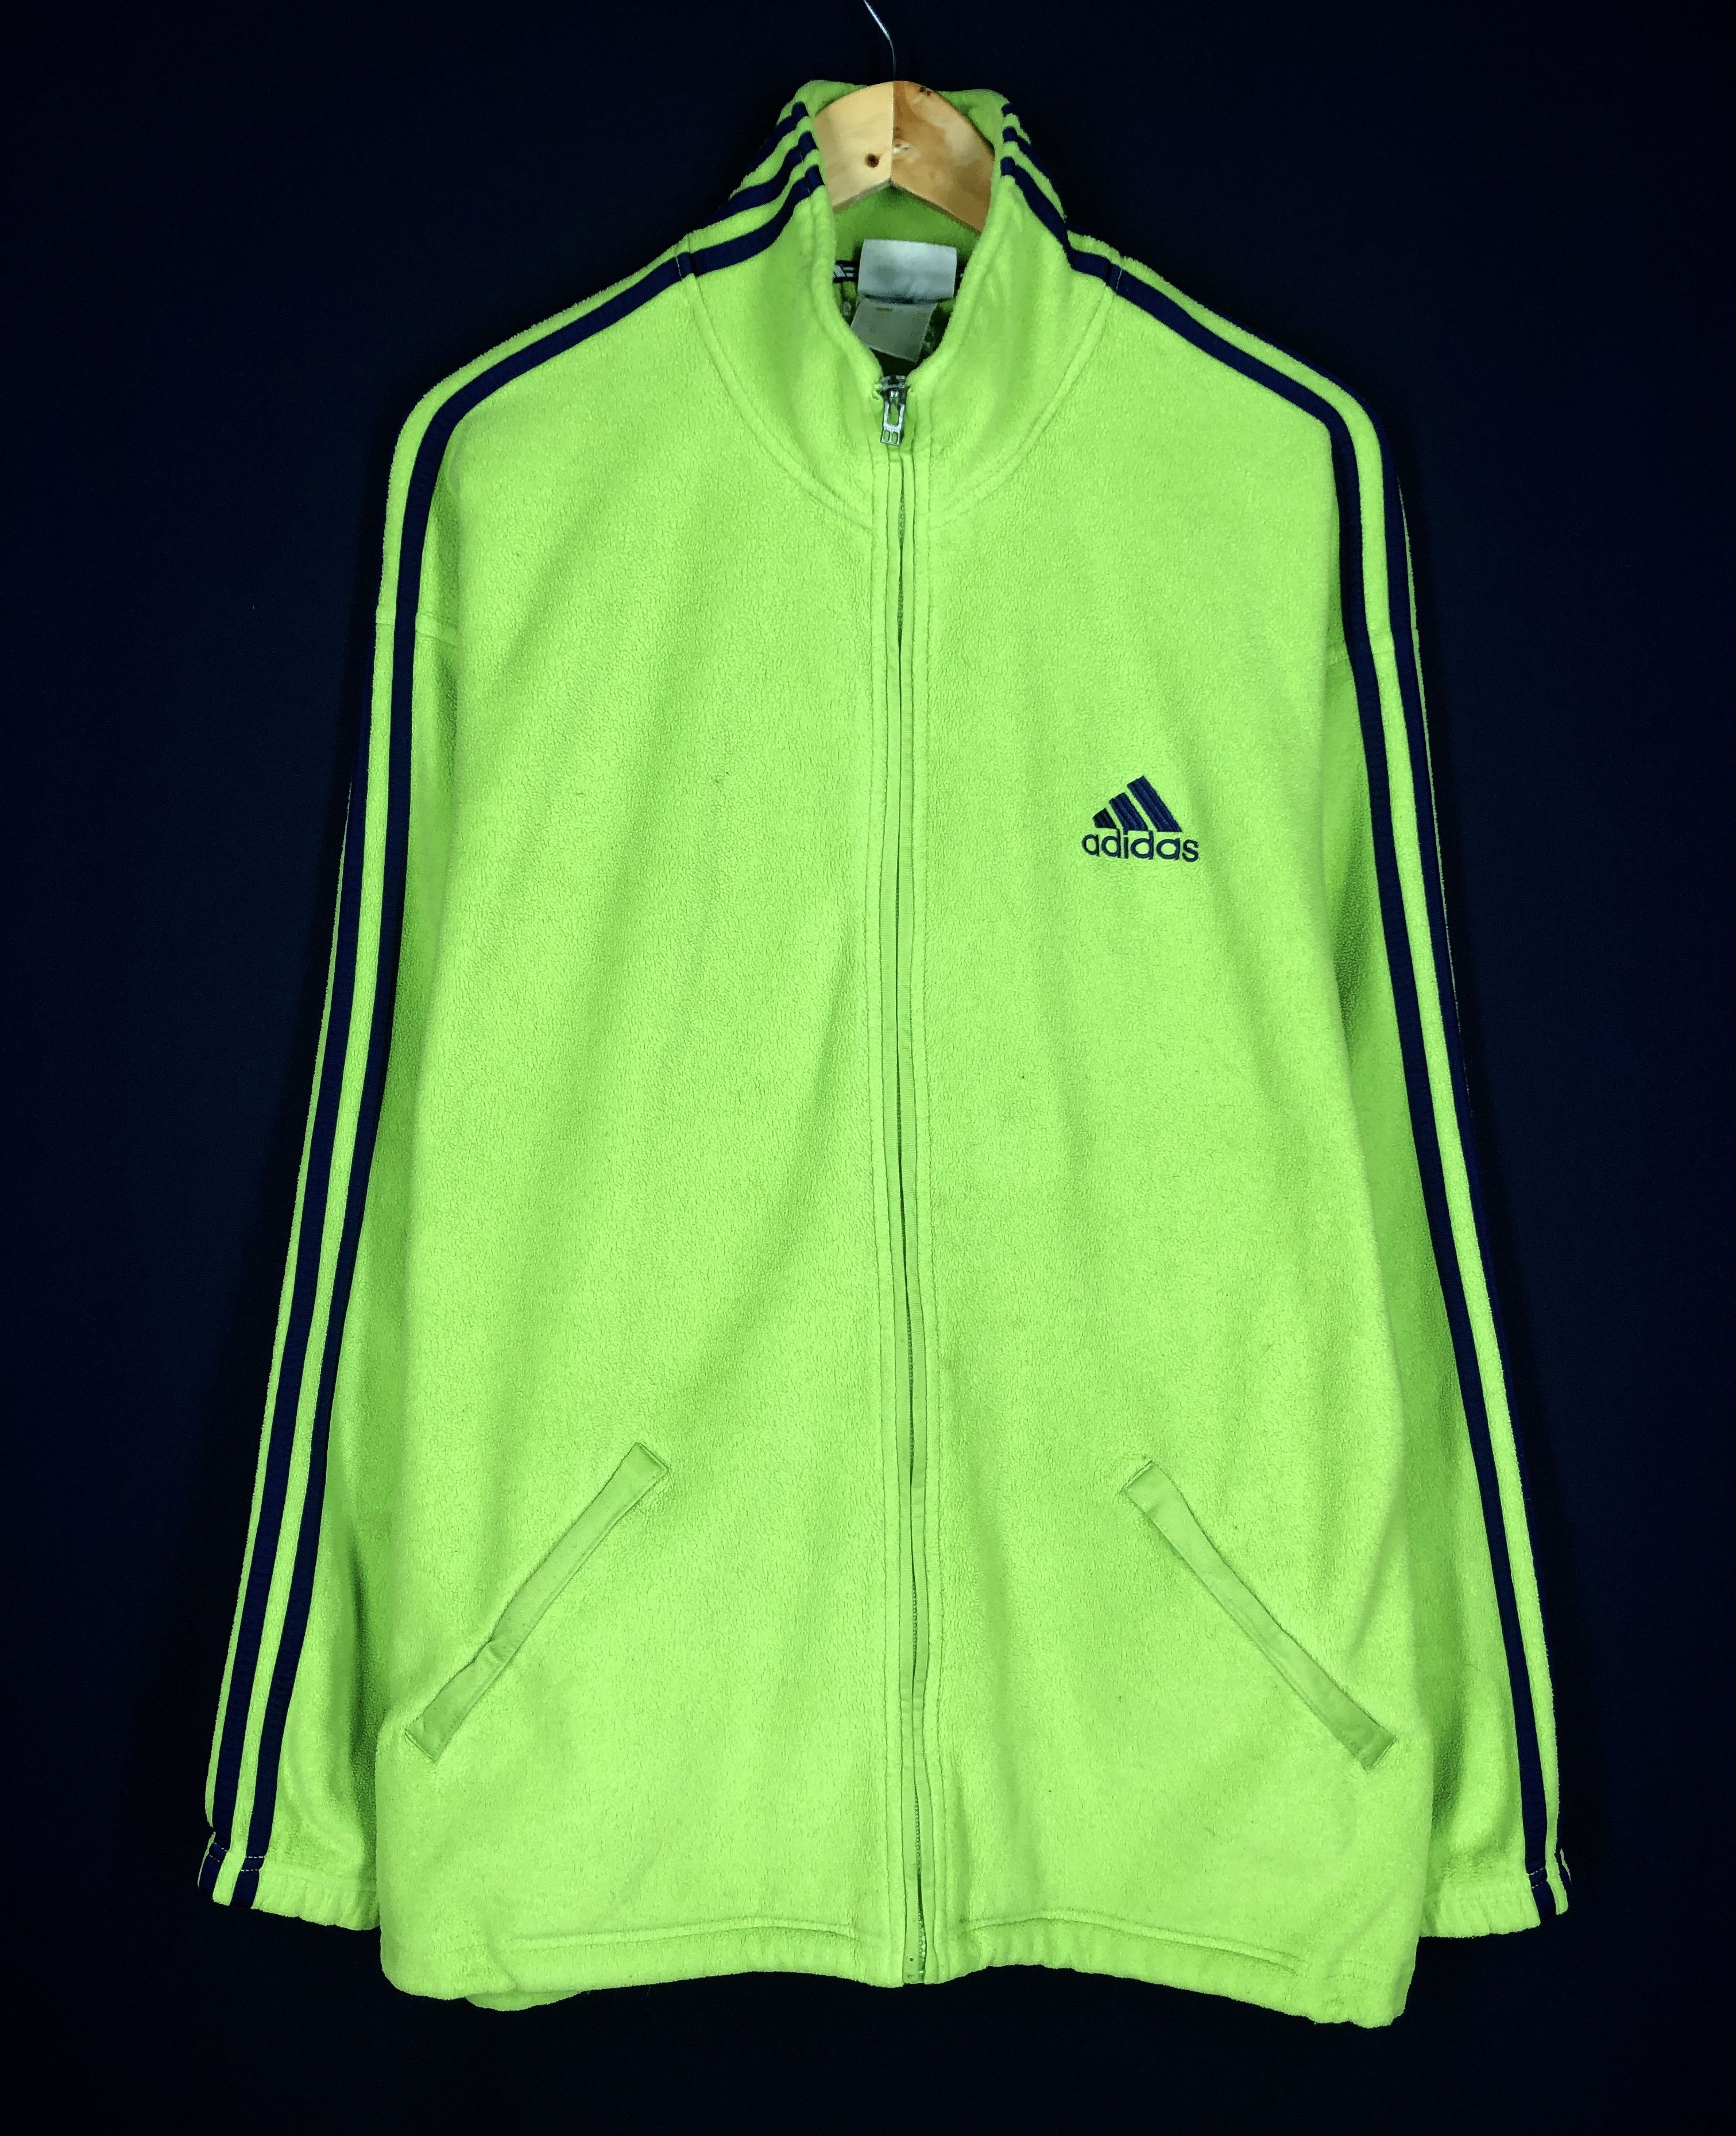 Adidas VTG Adidas Mint-Green Fleece Oversized Jumper Jacket Coat Size US L / EU 52-54 / 3 - 1 Preview